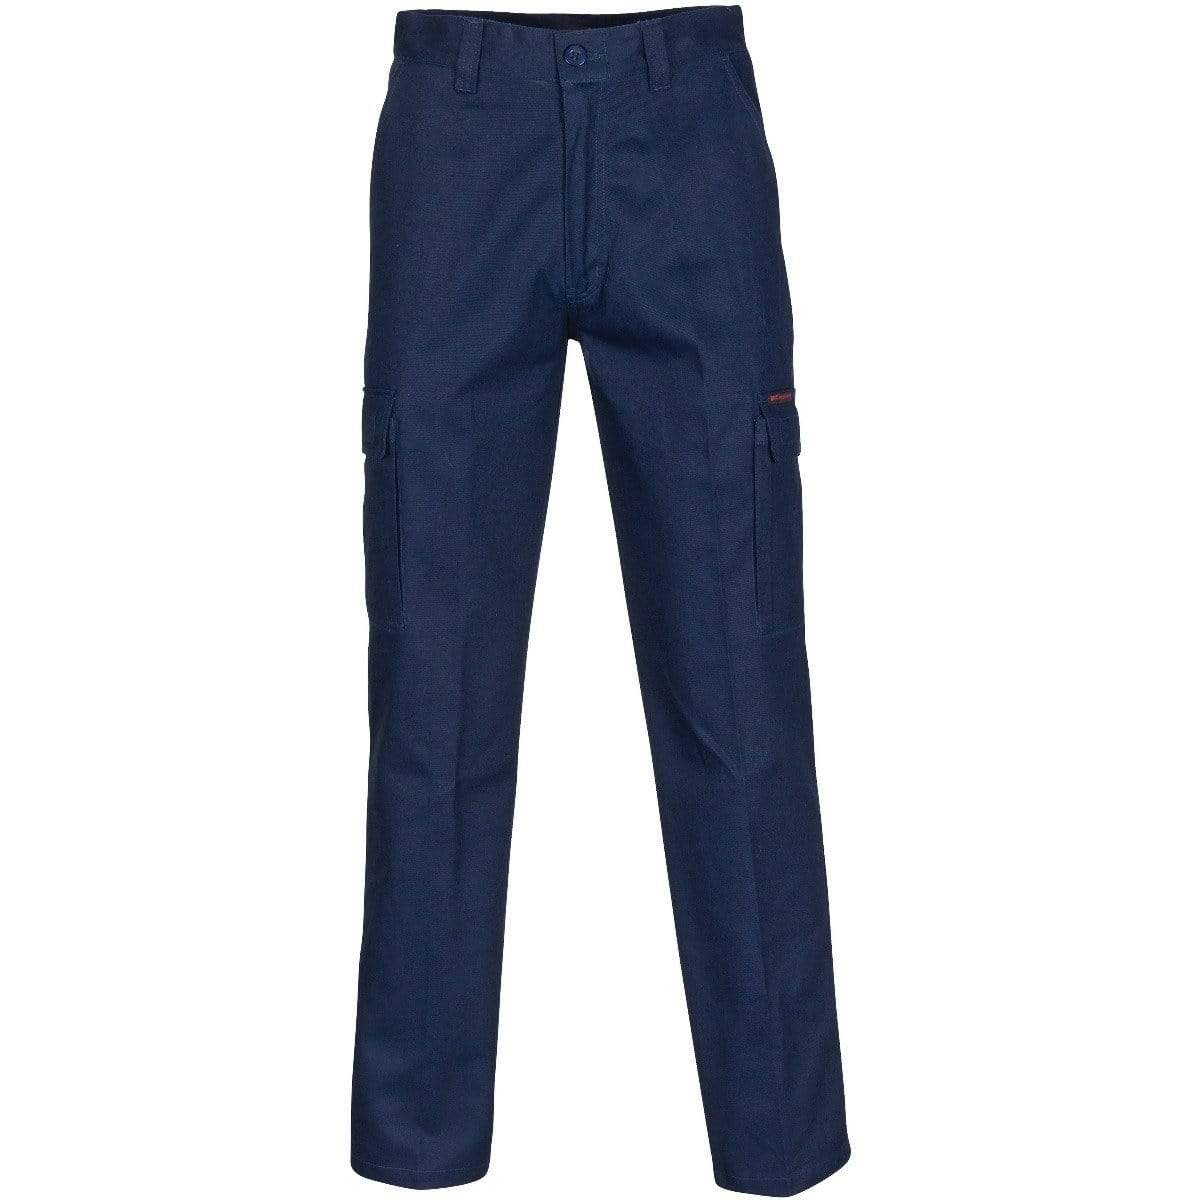 Dnc Workwear Middle Weight Cotton Double Slant Cargo Pants - 3359 Work Wear DNC Workwear Navy 72R 